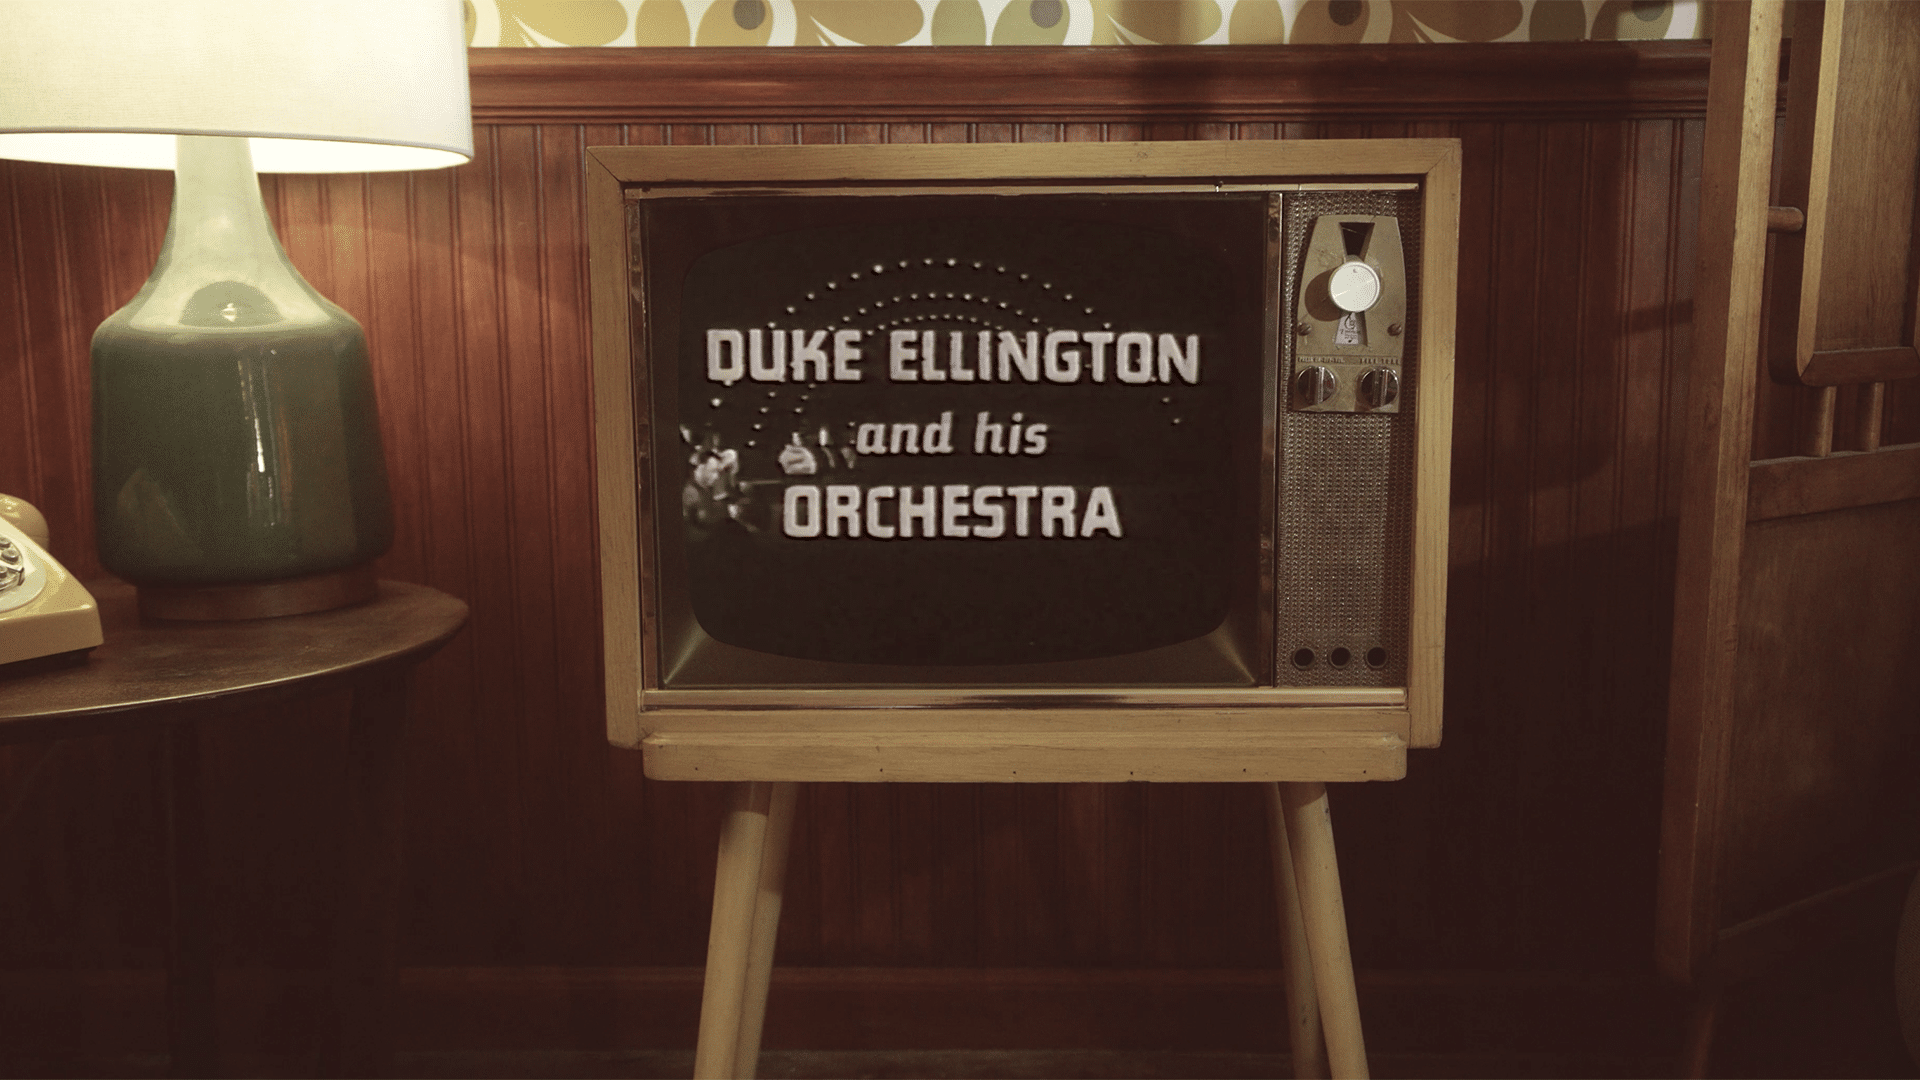 Vintage television showing Duke Ellington